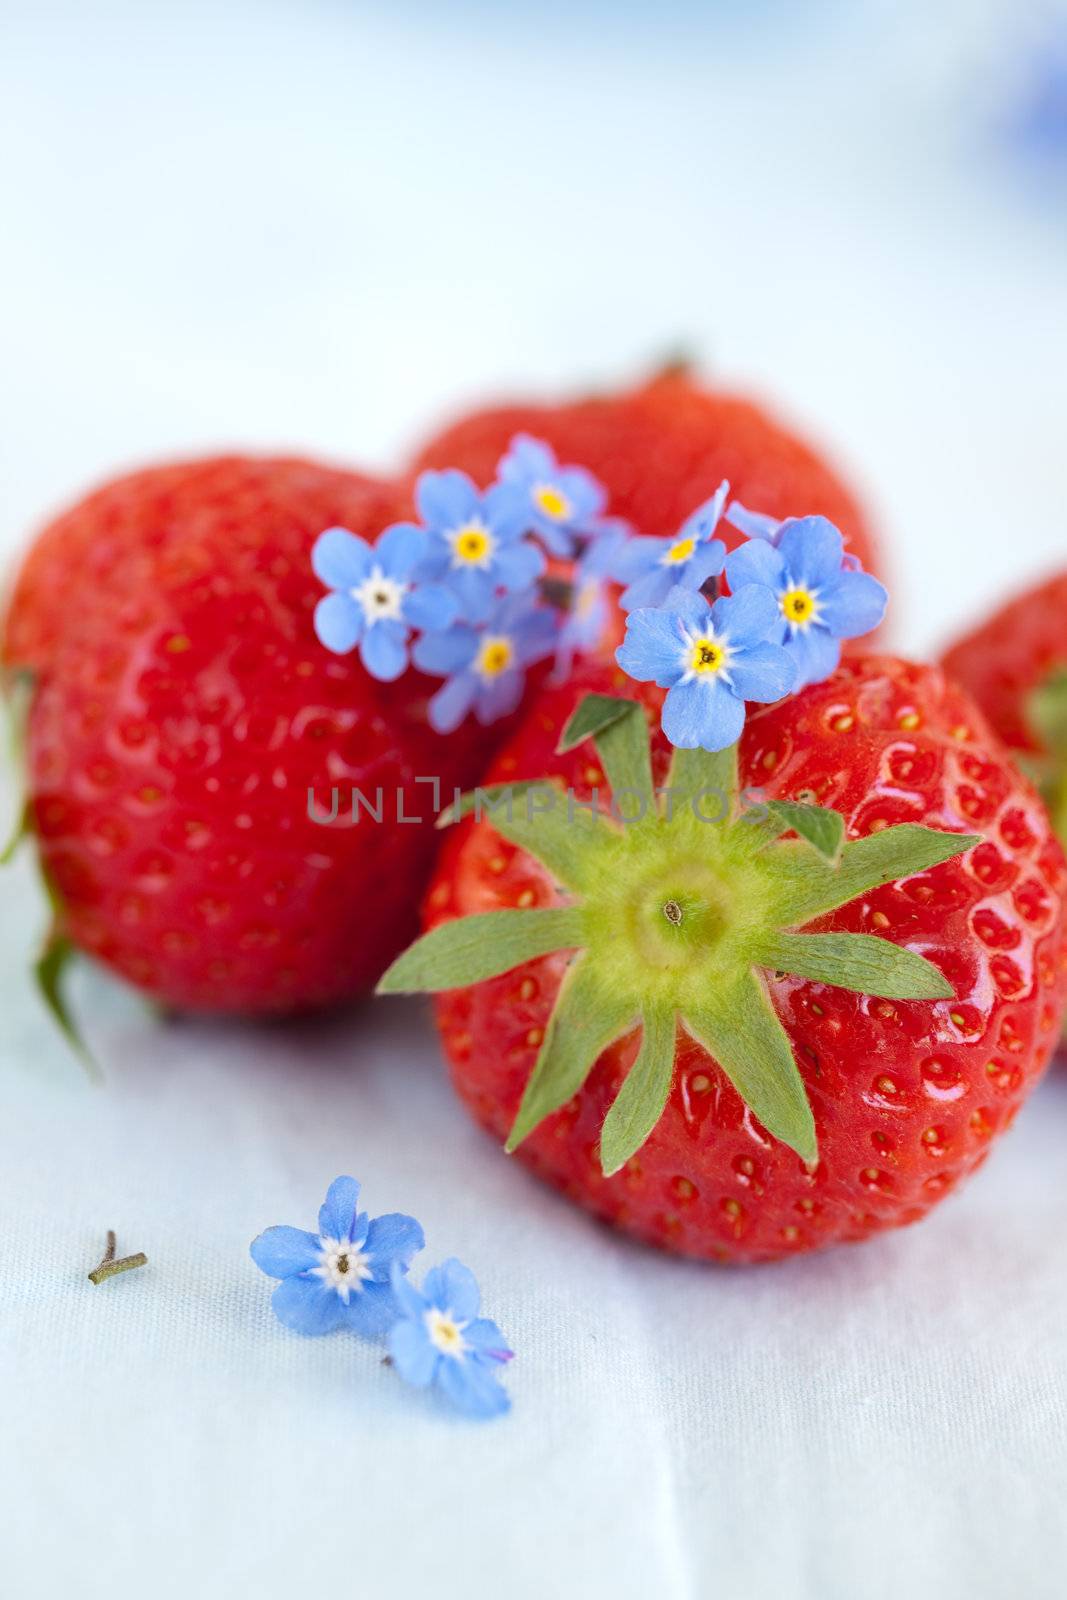 Strawberries by Fotosmurf